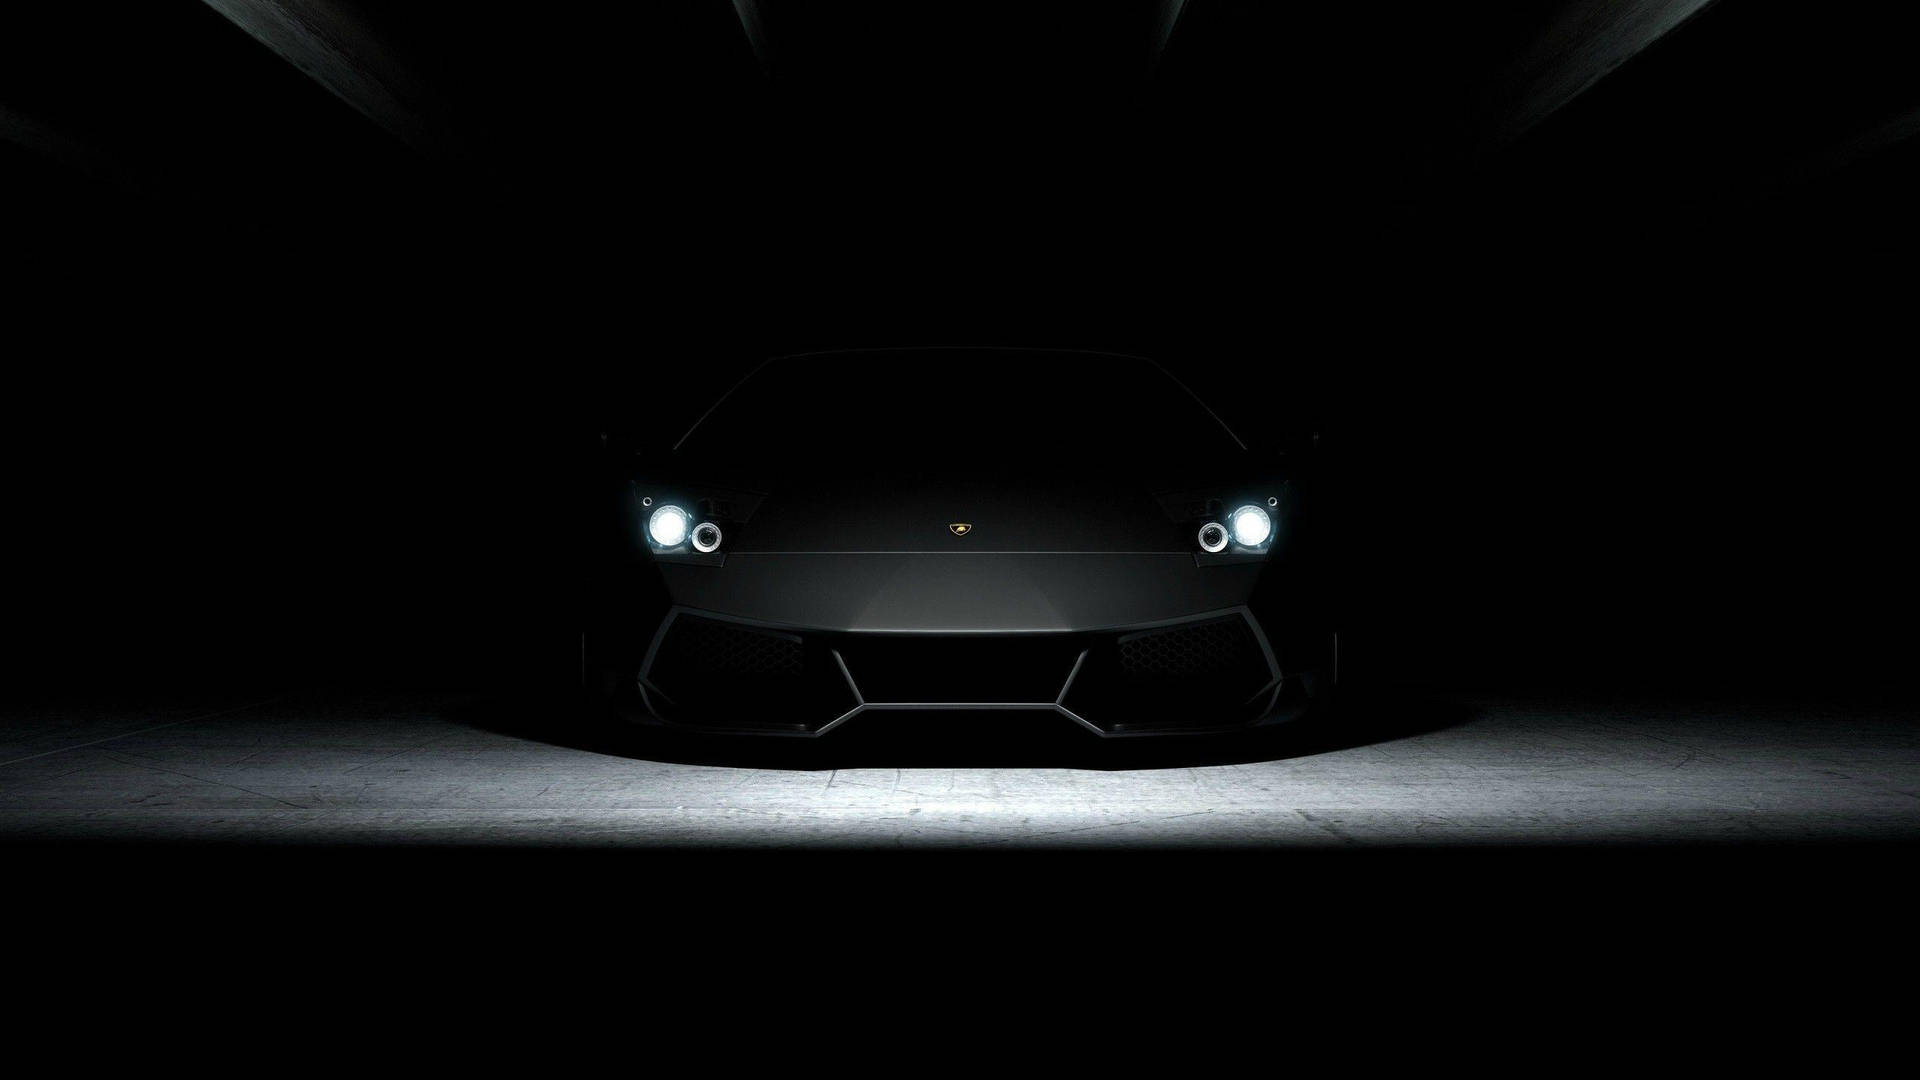 4k Black Car In Darkness Background